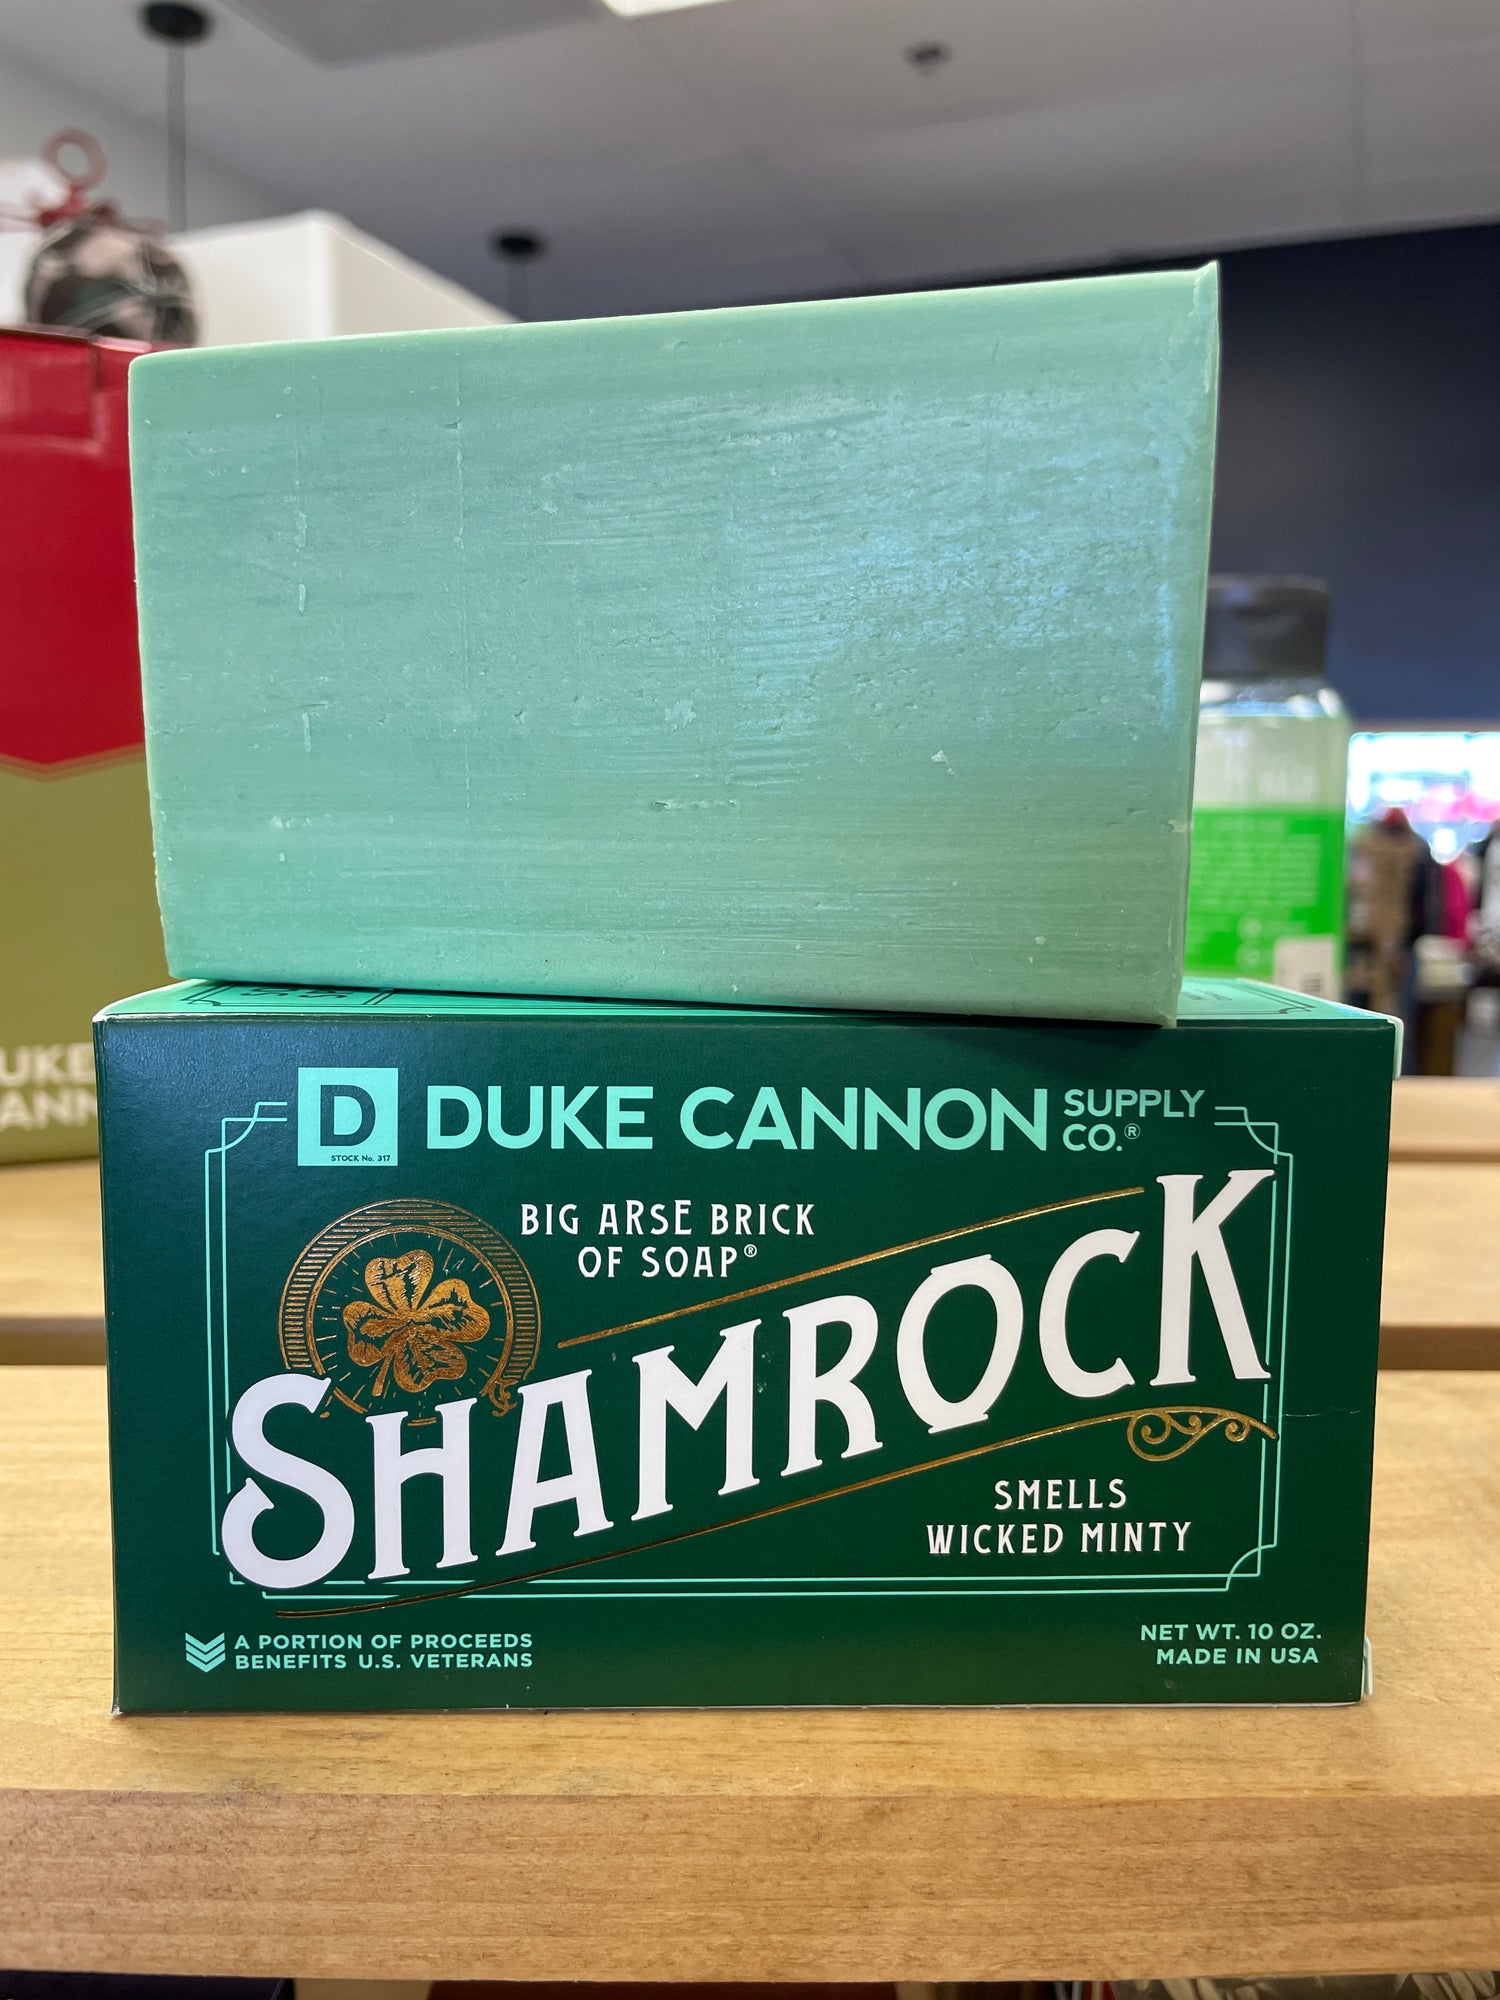 Duke Cannon Big Ass Brick of Soap